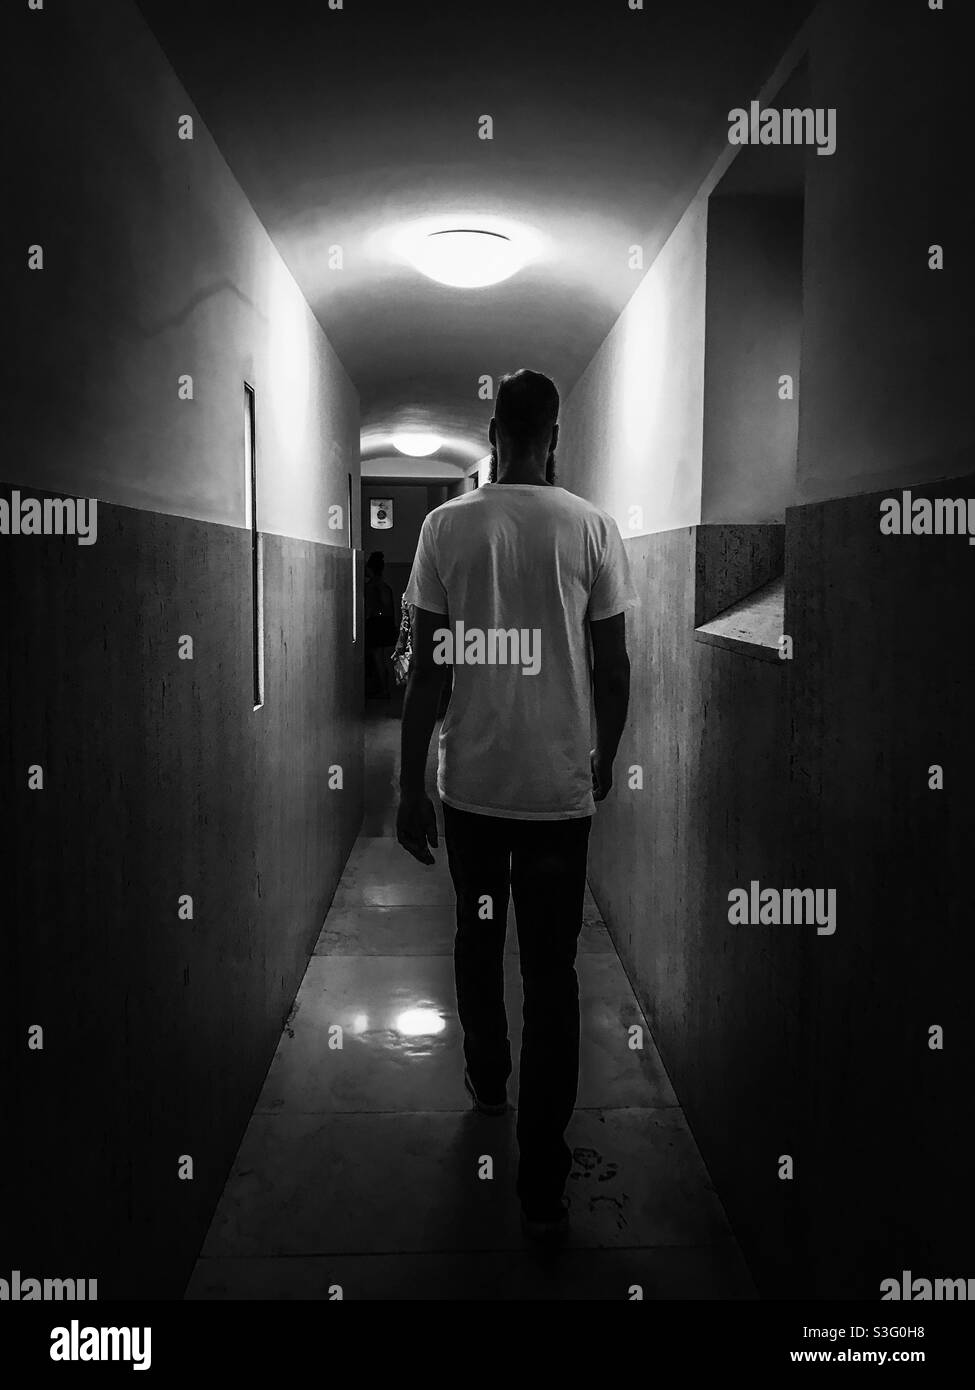 Man walking down a corridor Stock Photo